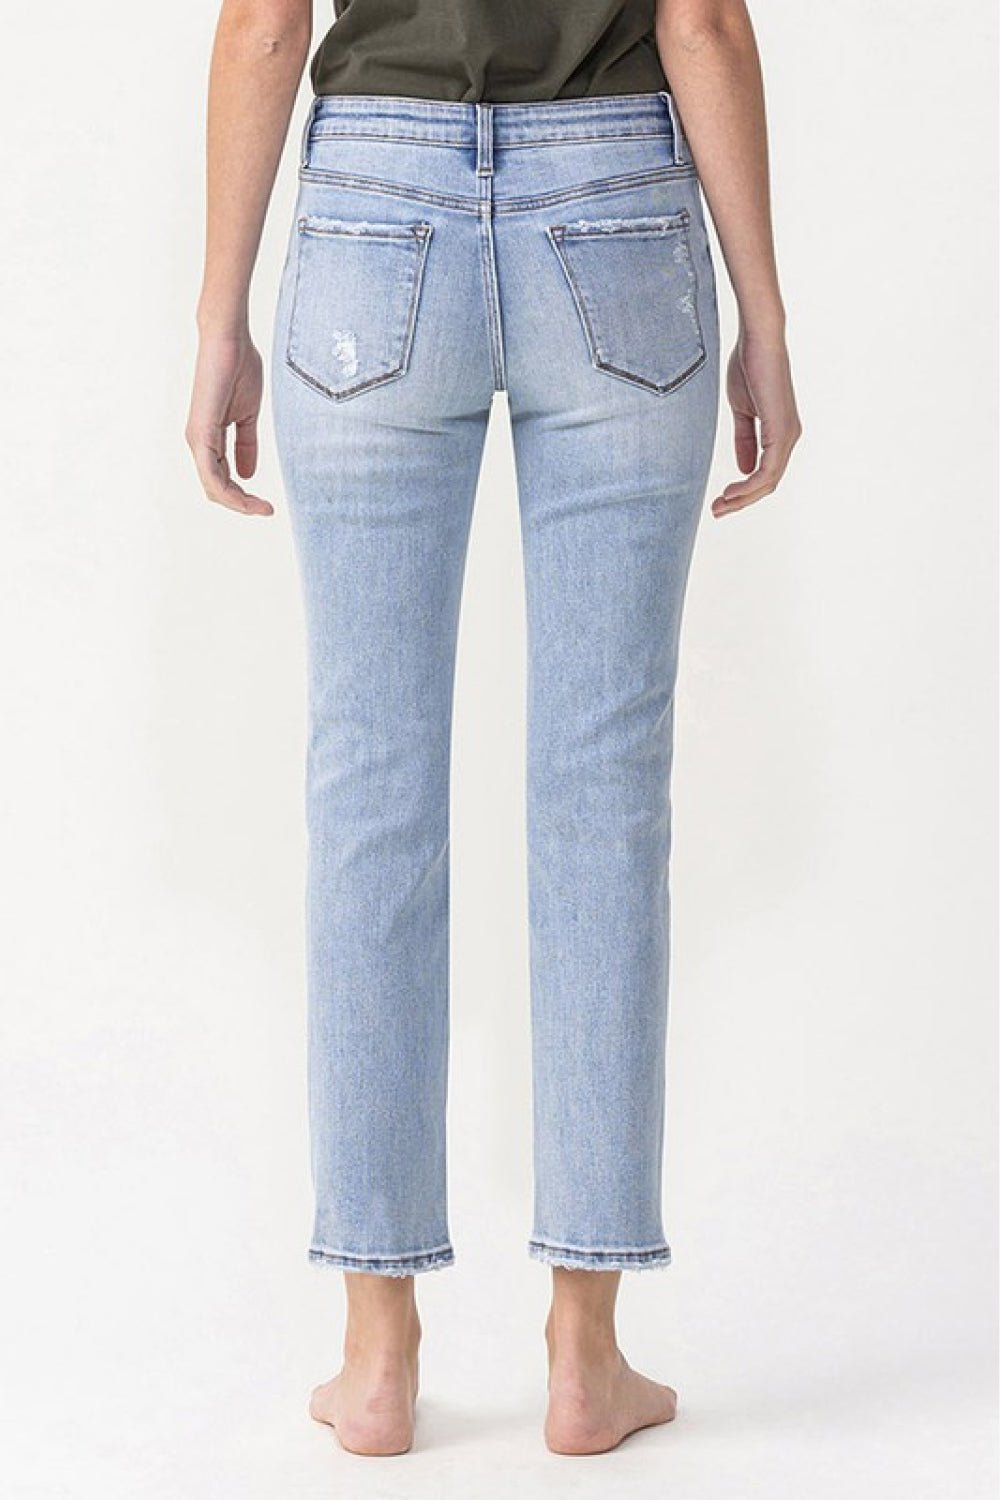 Midrise Crop Straight Leg Light Wash JeansJeansLovervet